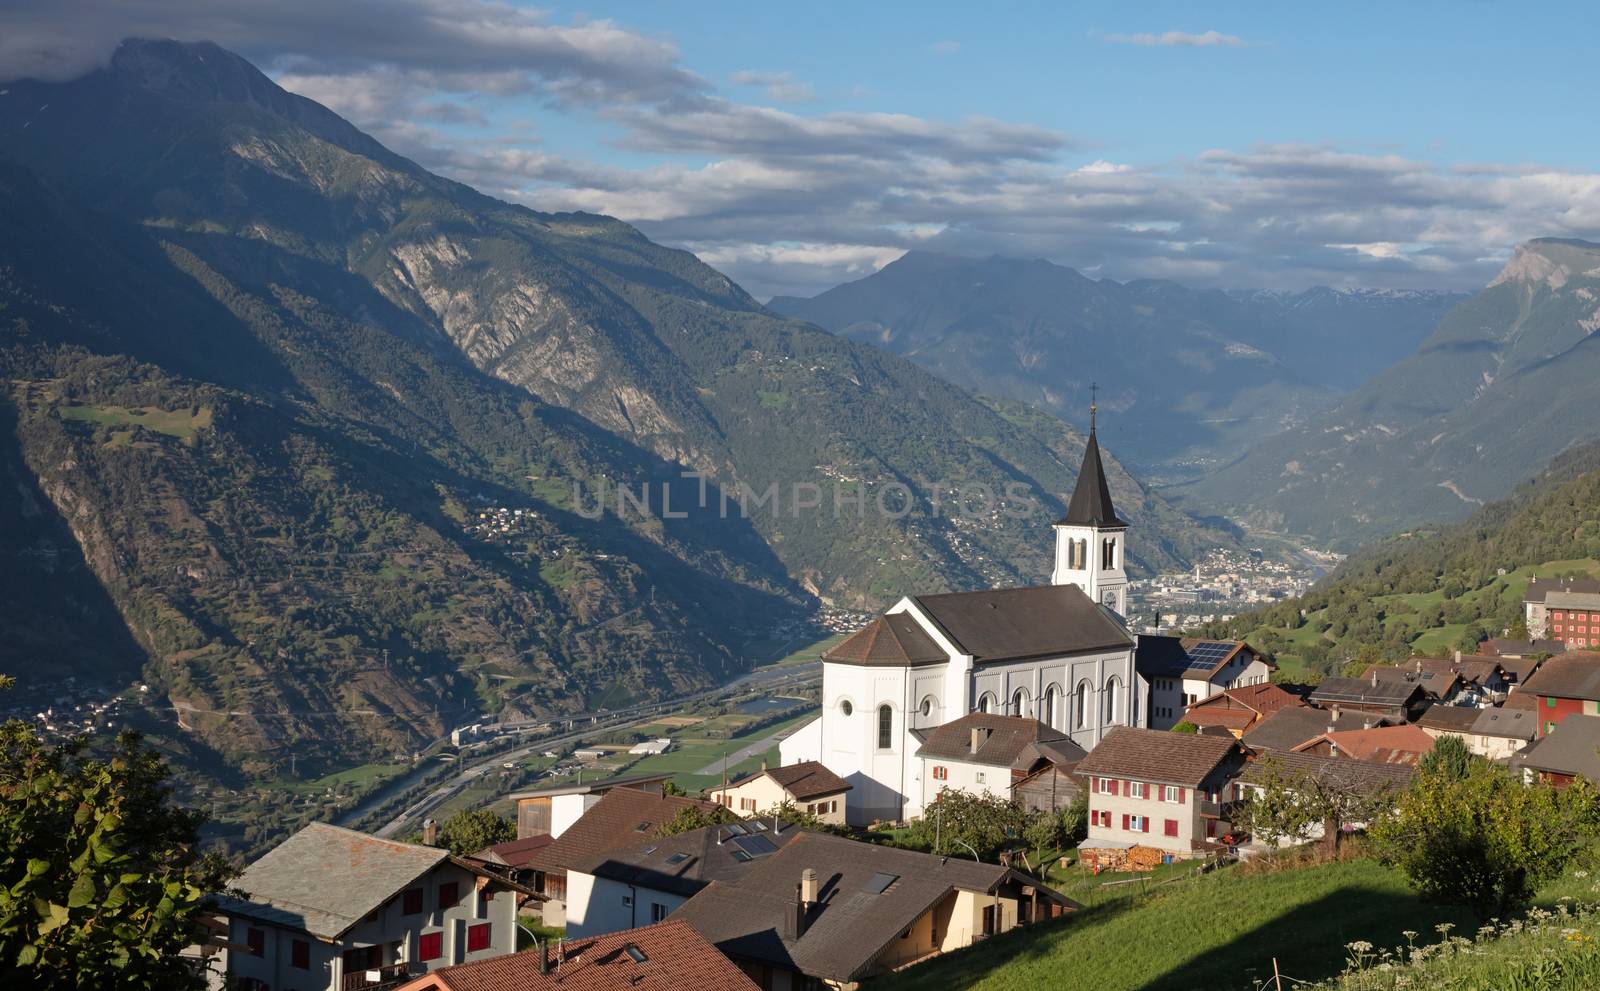 Eisscholl, Switzerland on july 17, 2020: The restored church of  by michaklootwijk